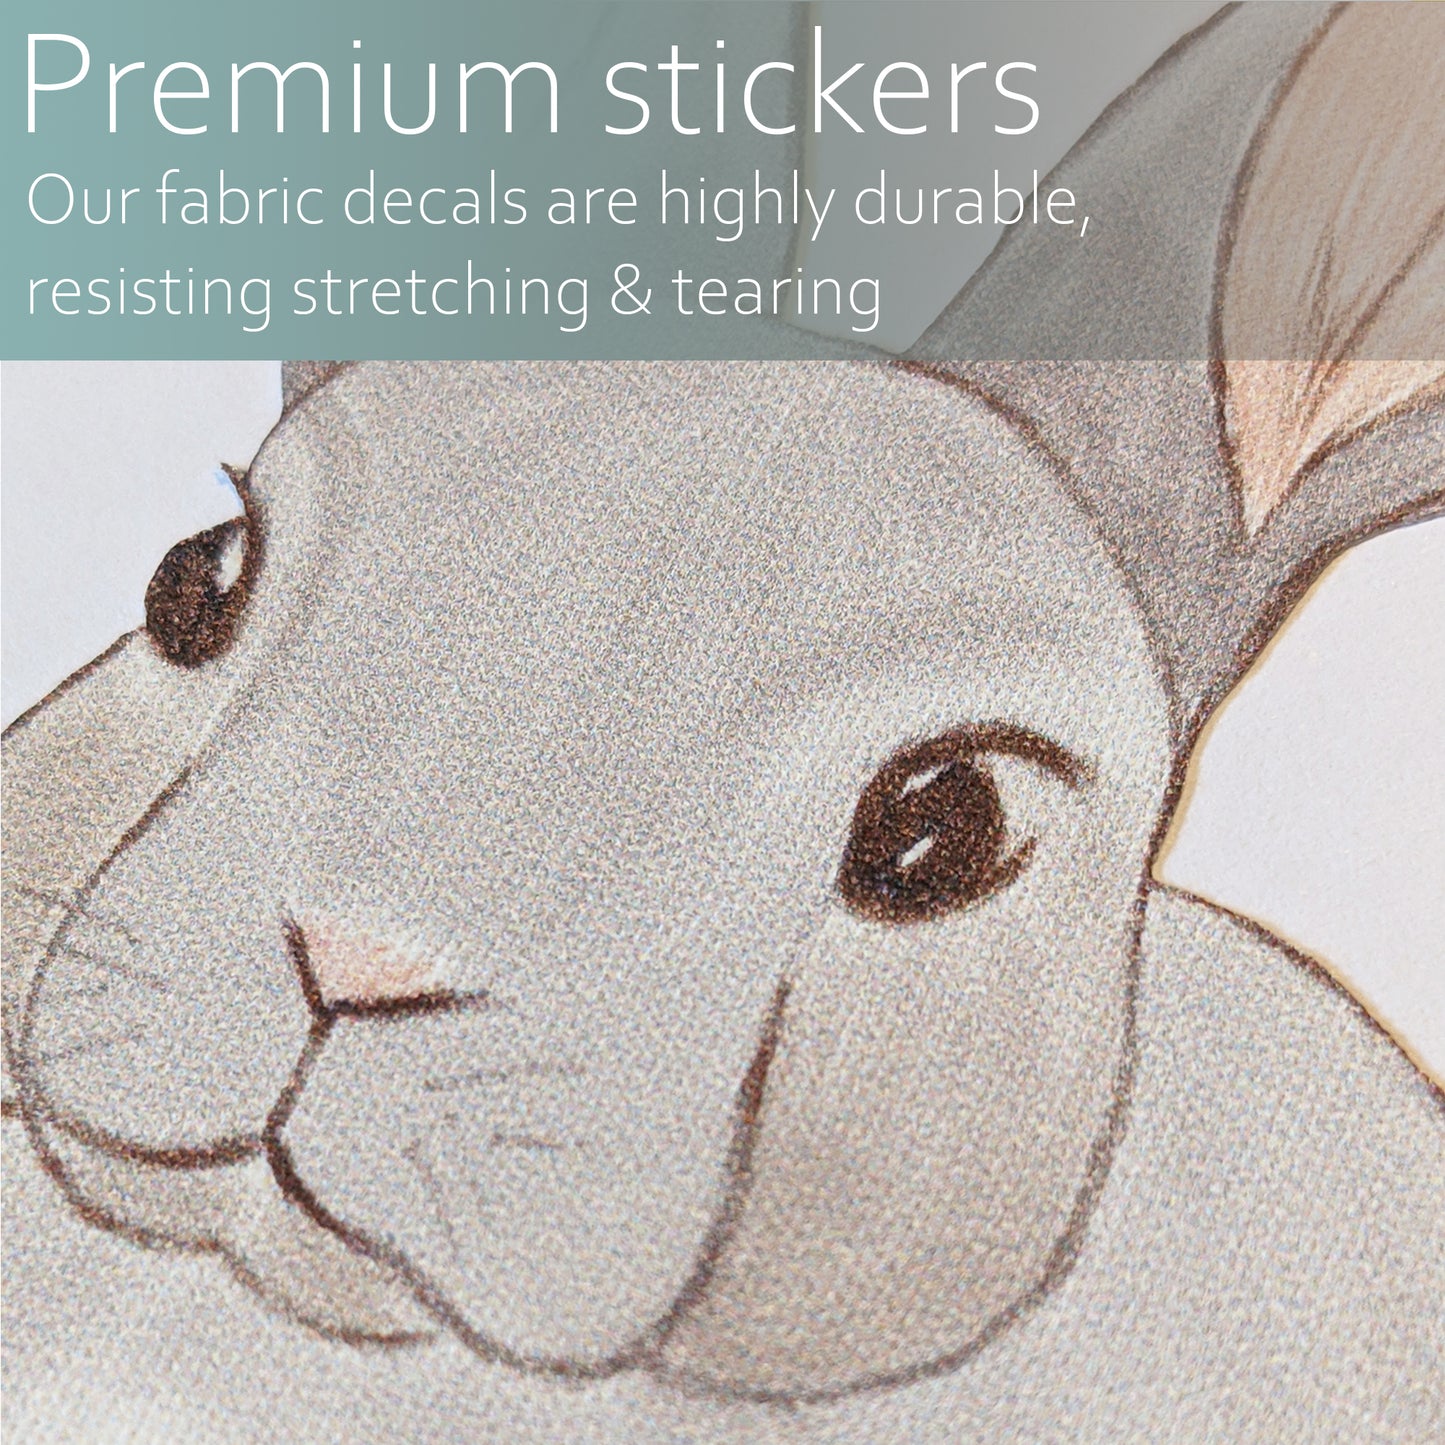 Hand drawn bunny rabbits | Fabric wall stickers